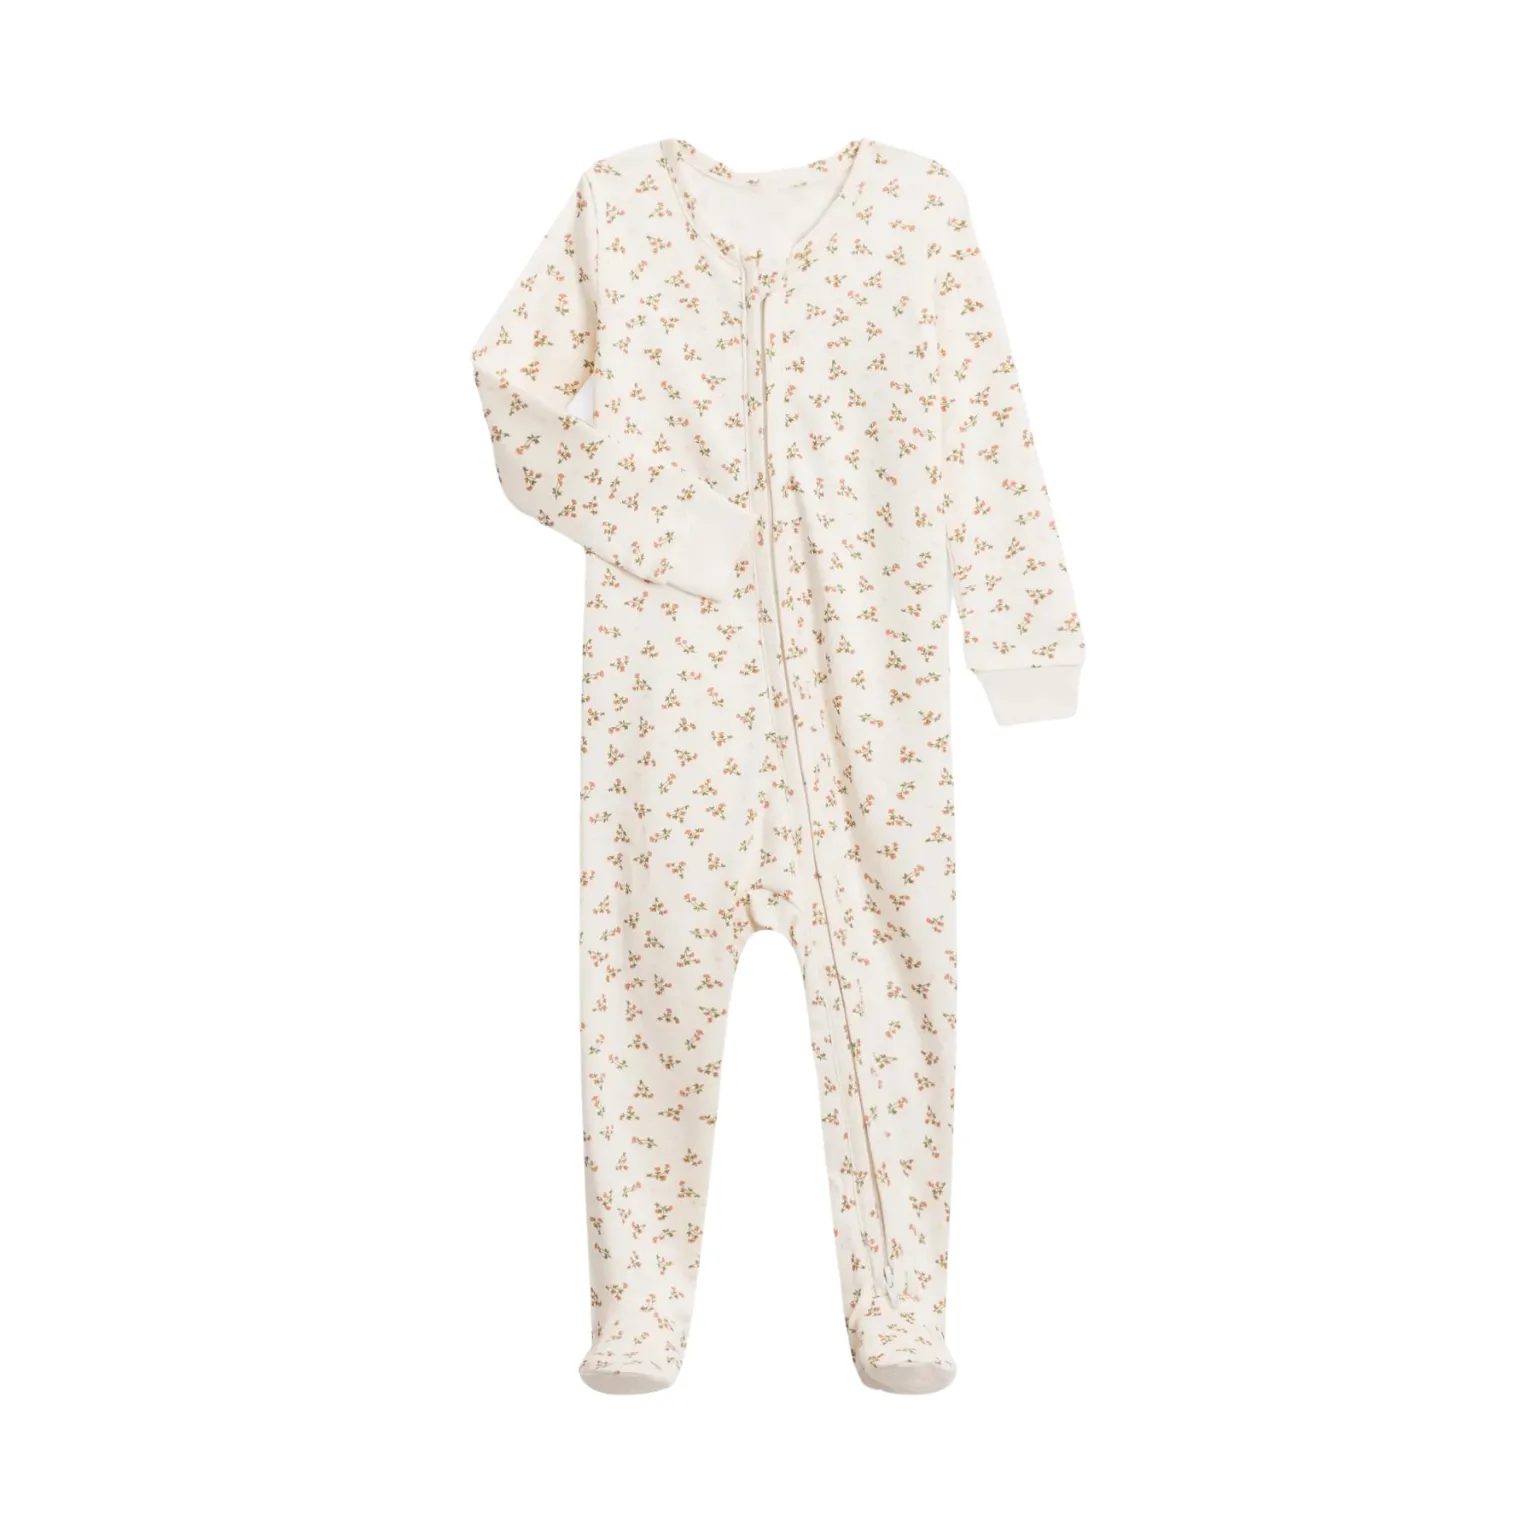 Manufacturing Baby Pajamas according to your needs